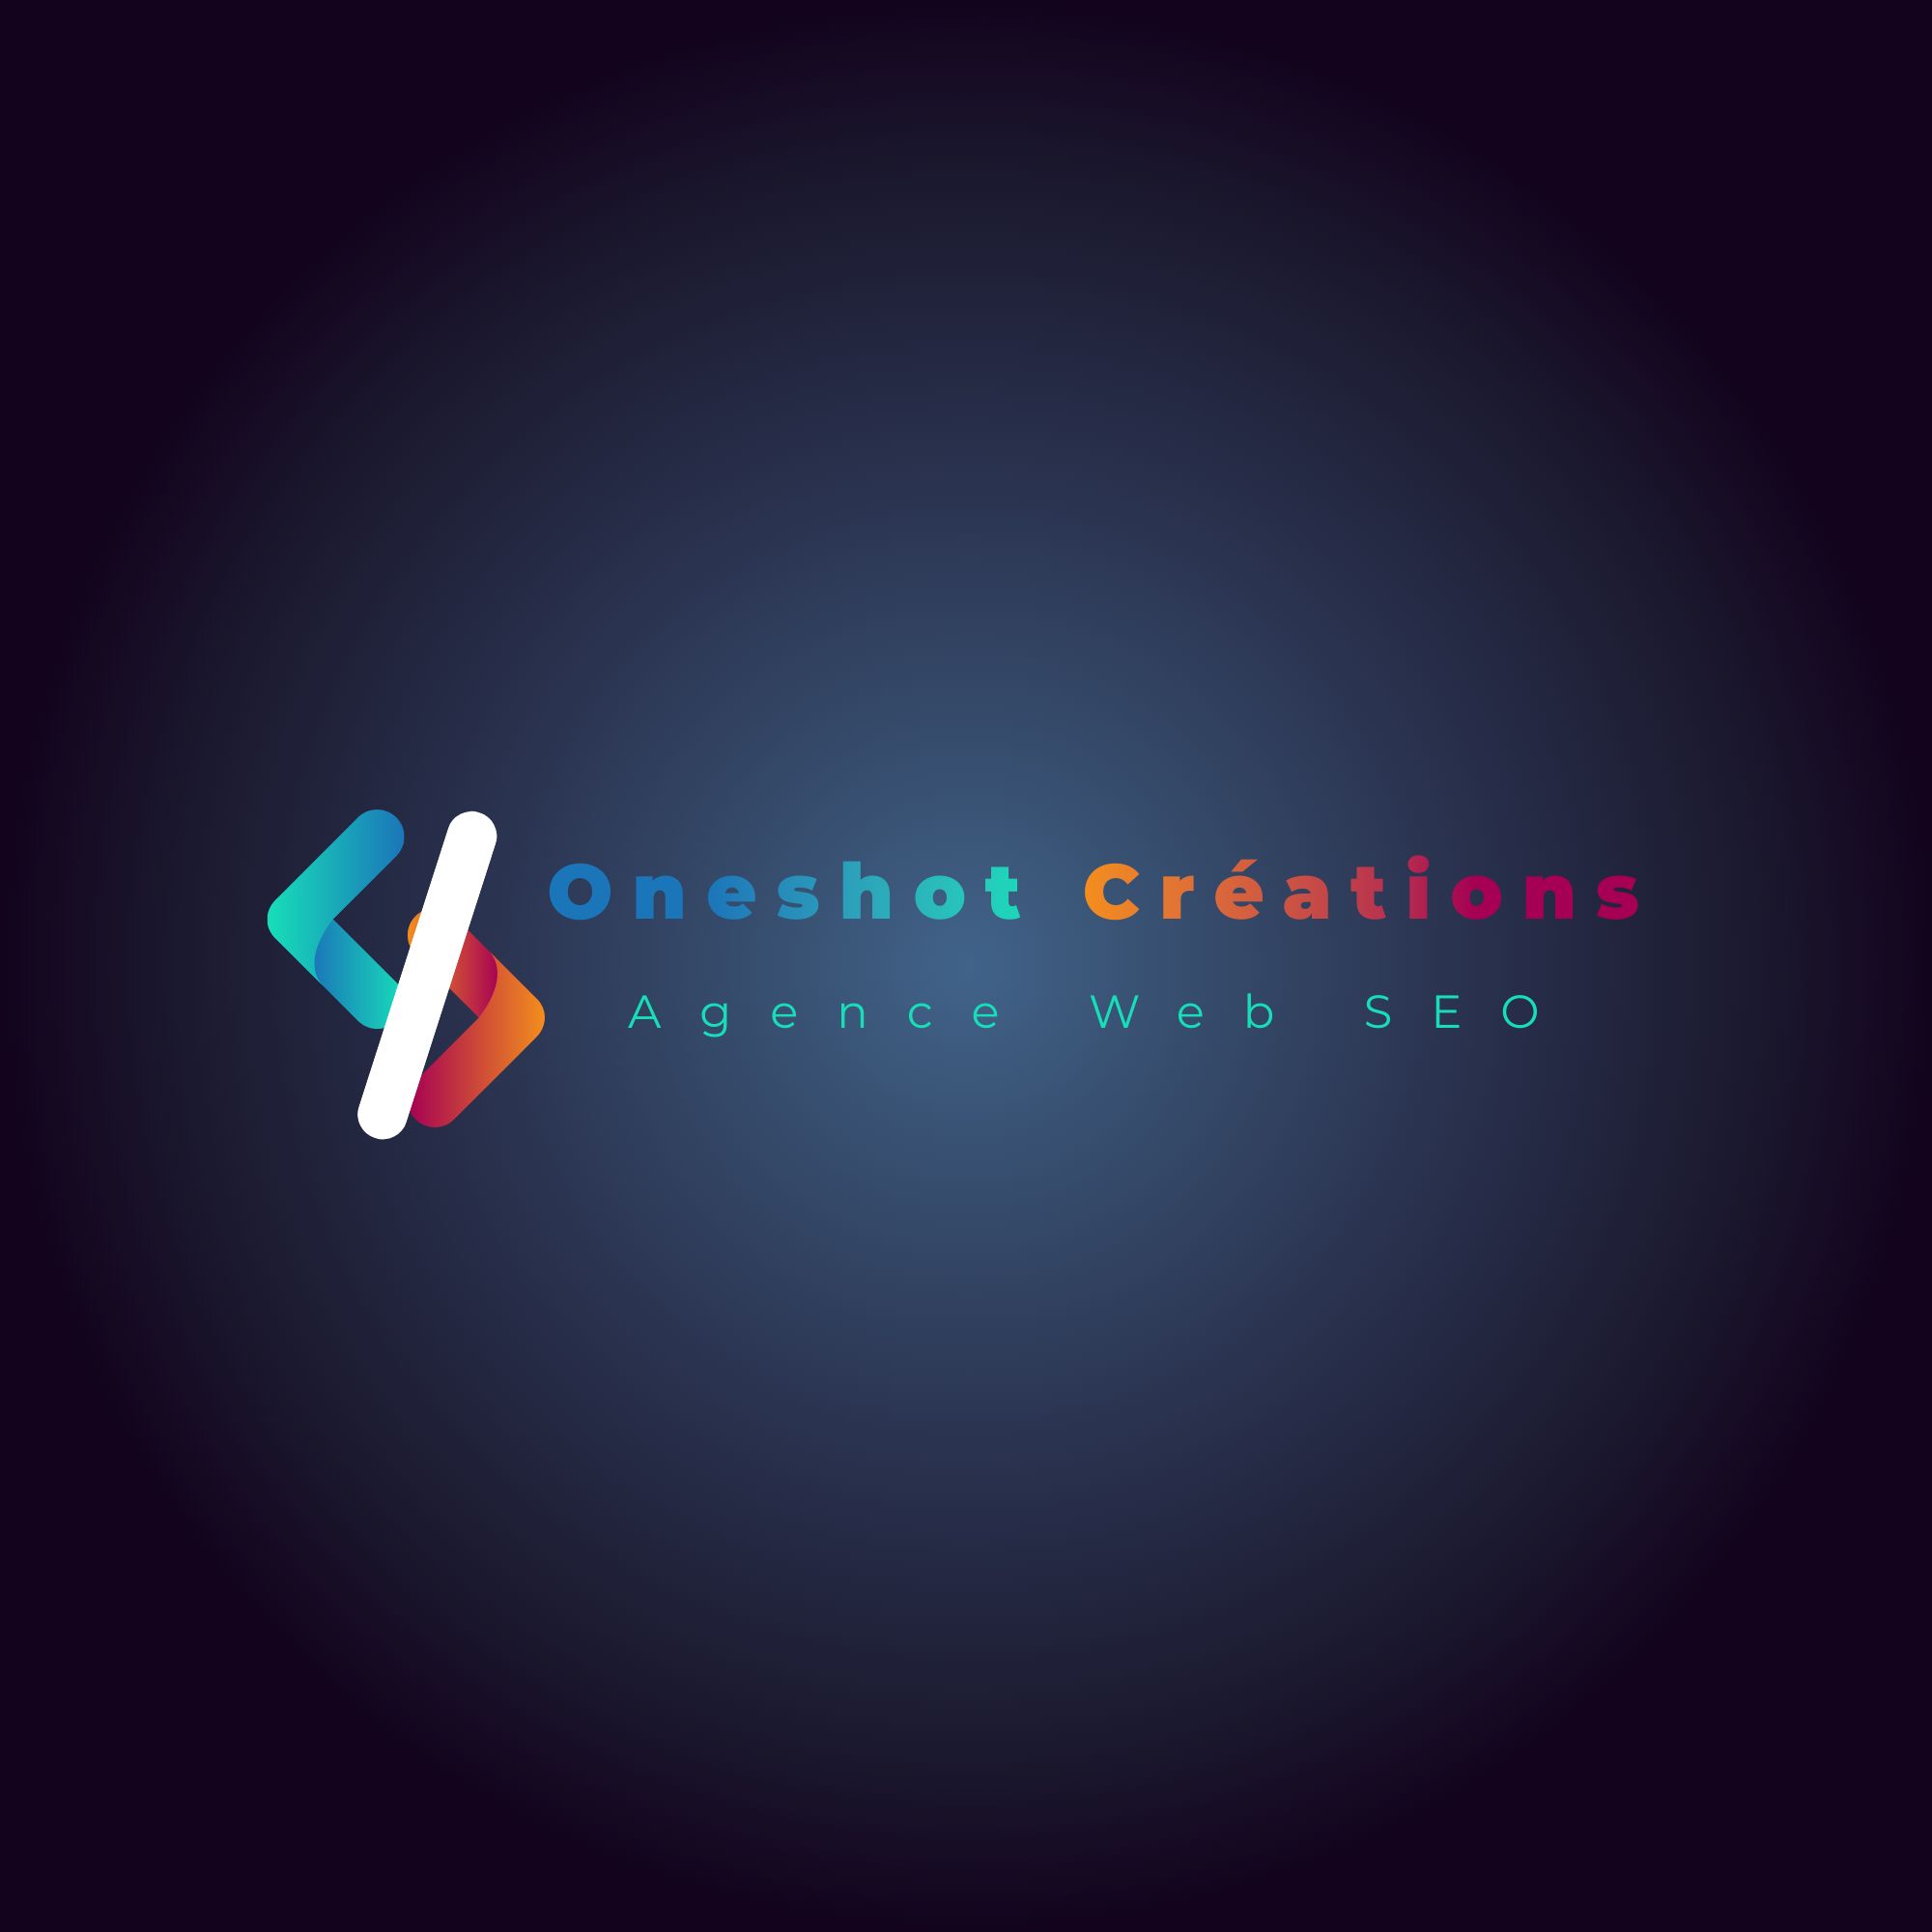 ONESHOT CREATIONS